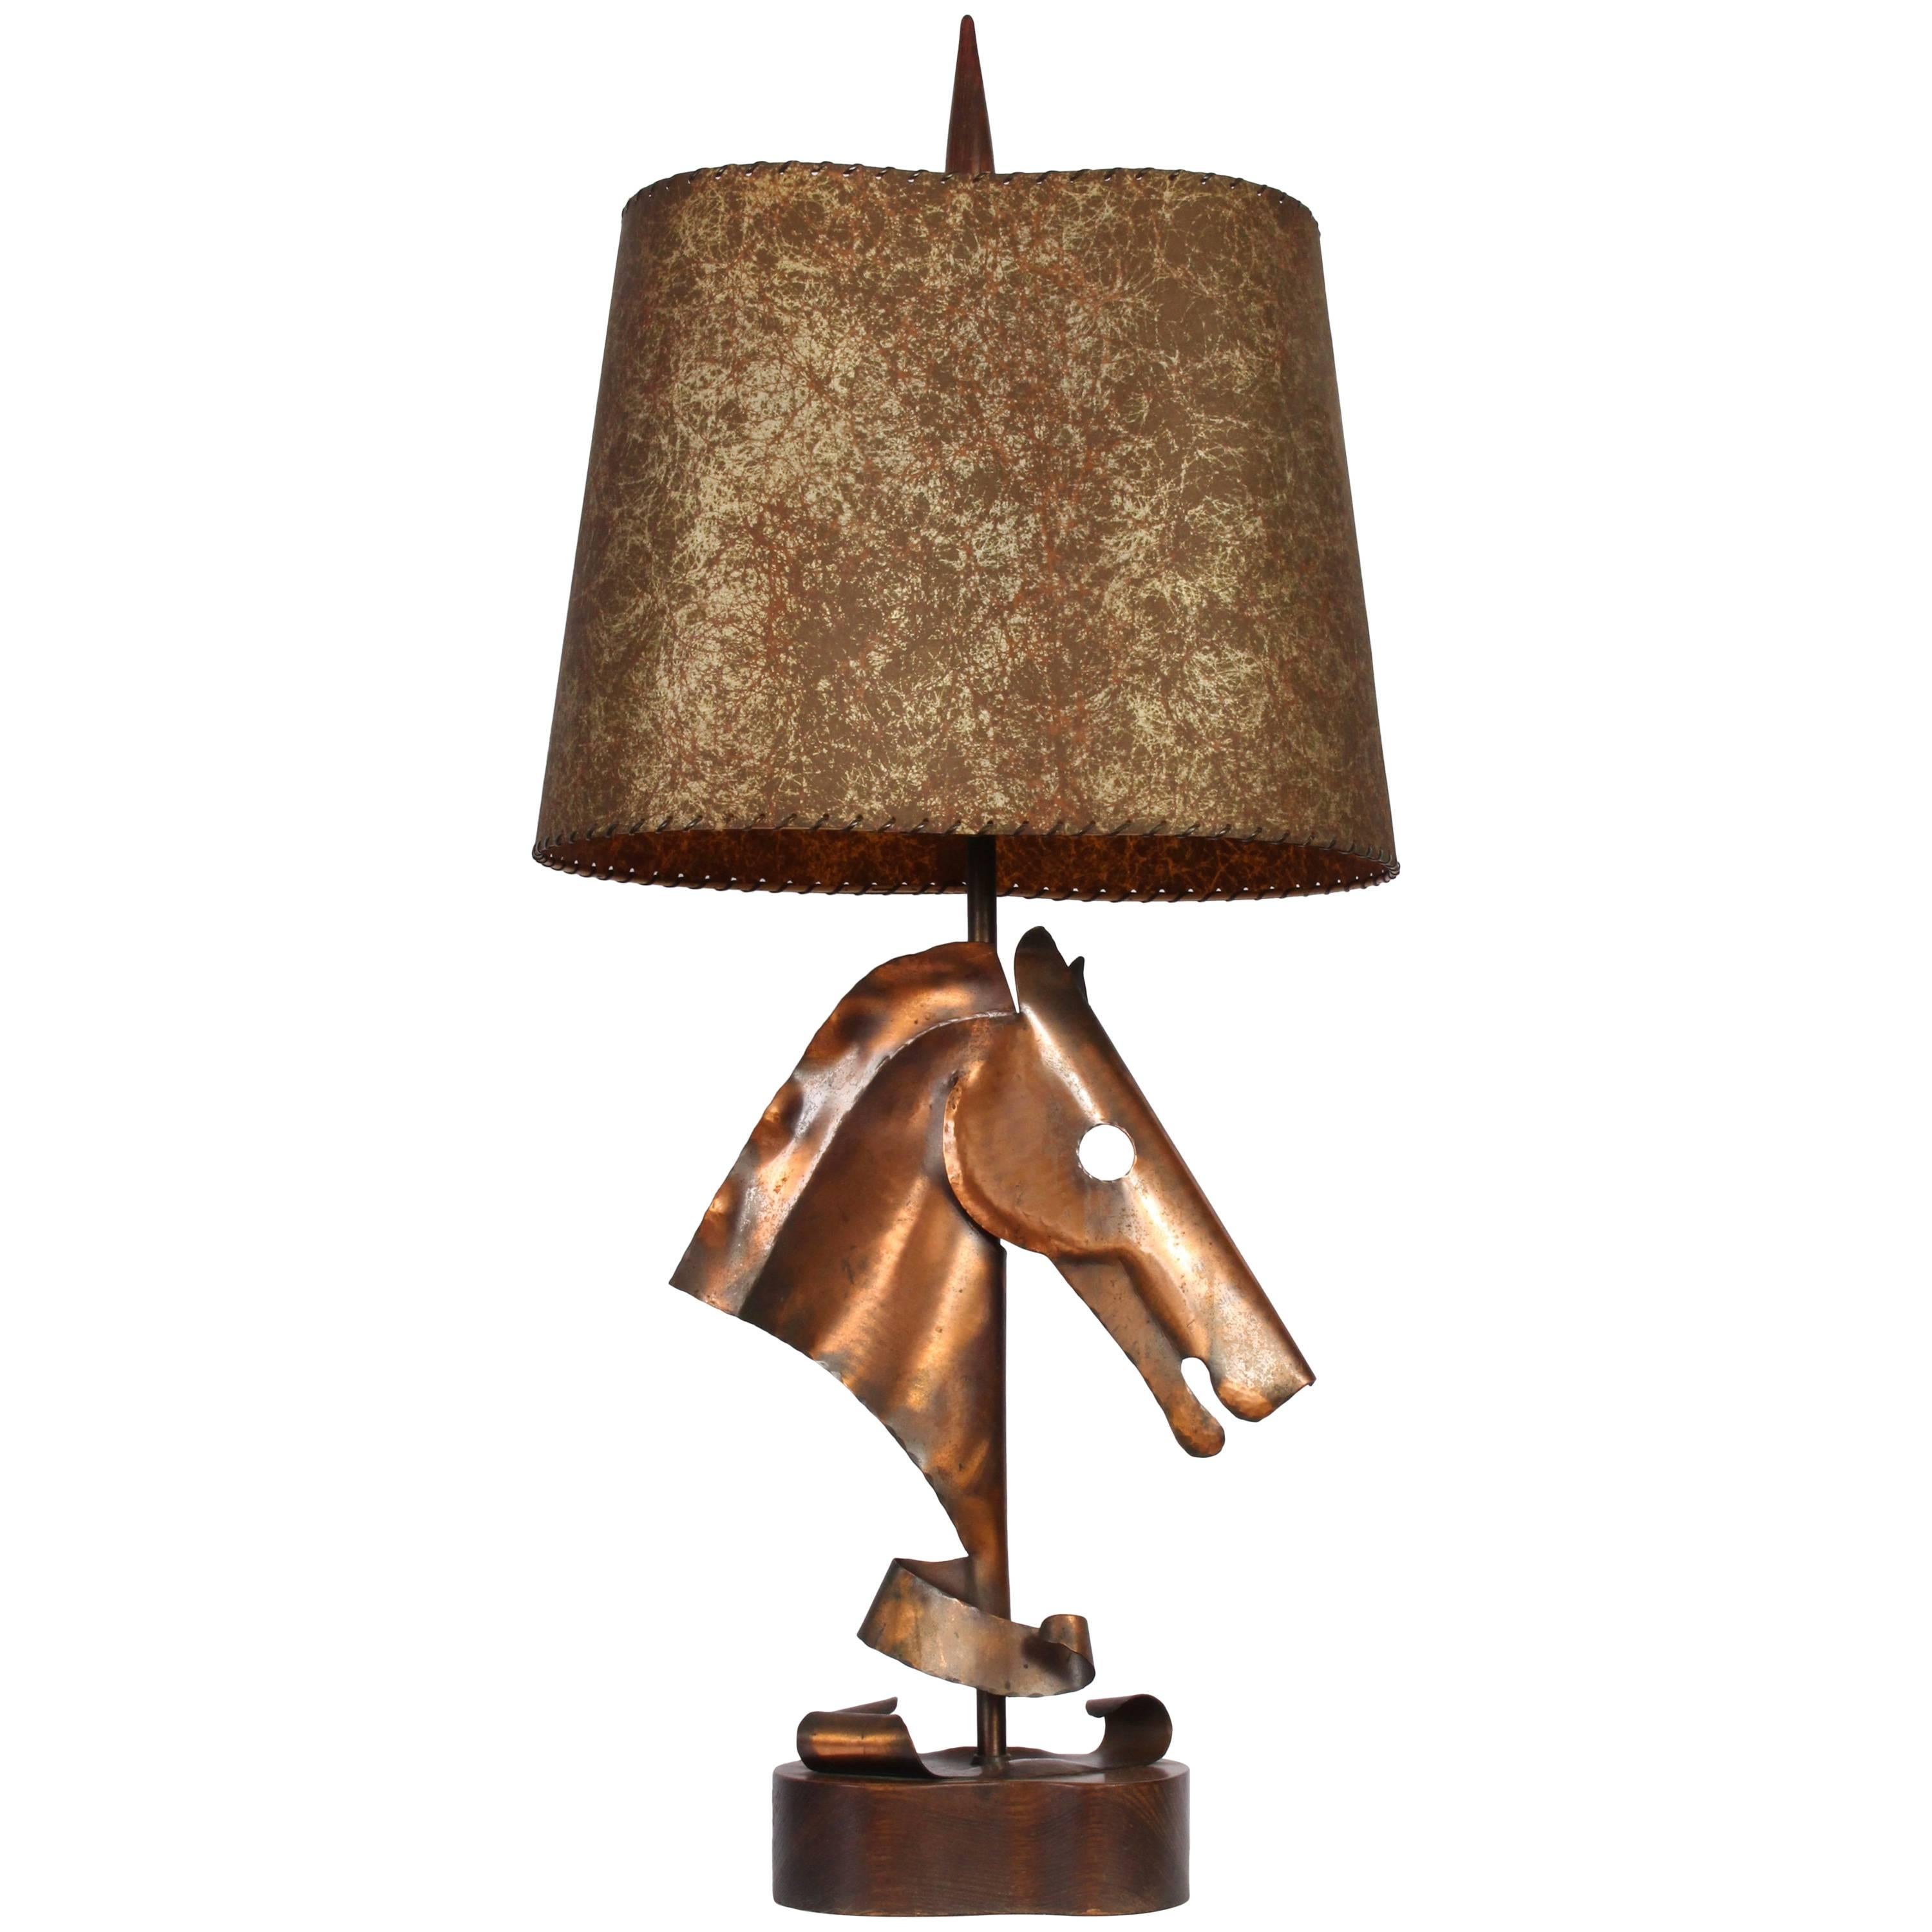 Yasha Heifetz Horse Head Table Lamp in Hammered Copper, Circa 1950